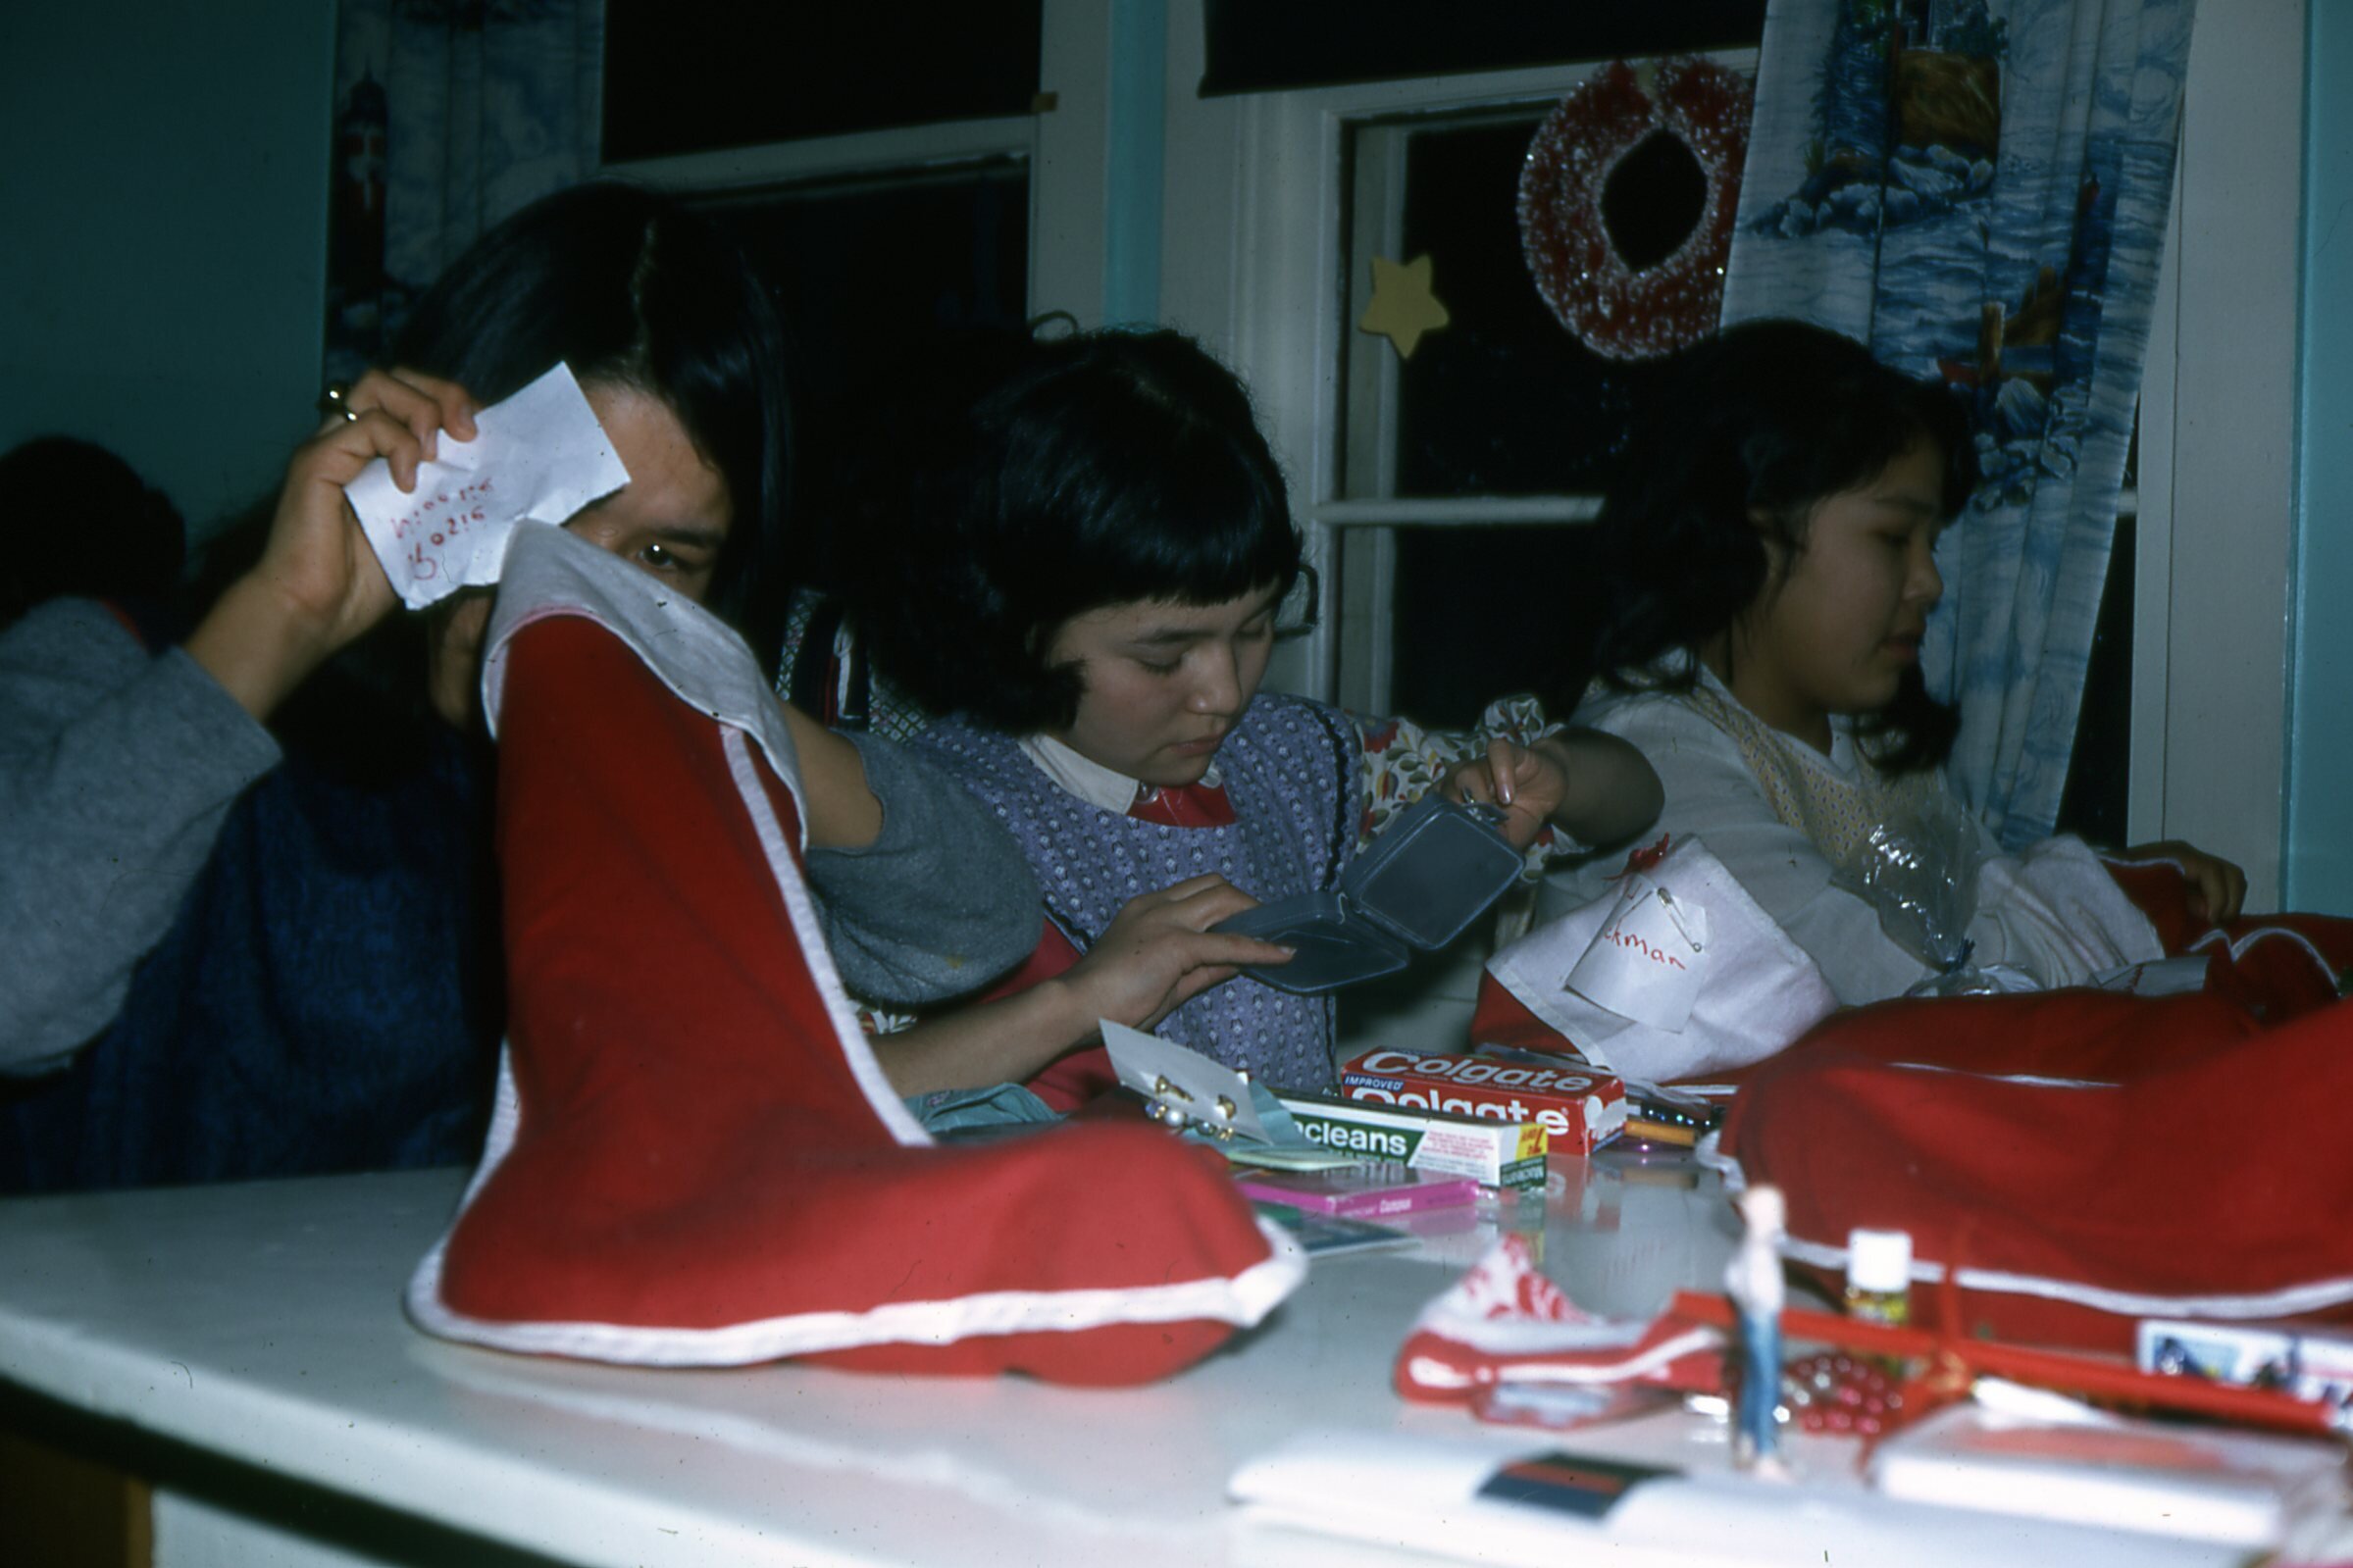 1970 Opening Christmas stockings.jpg